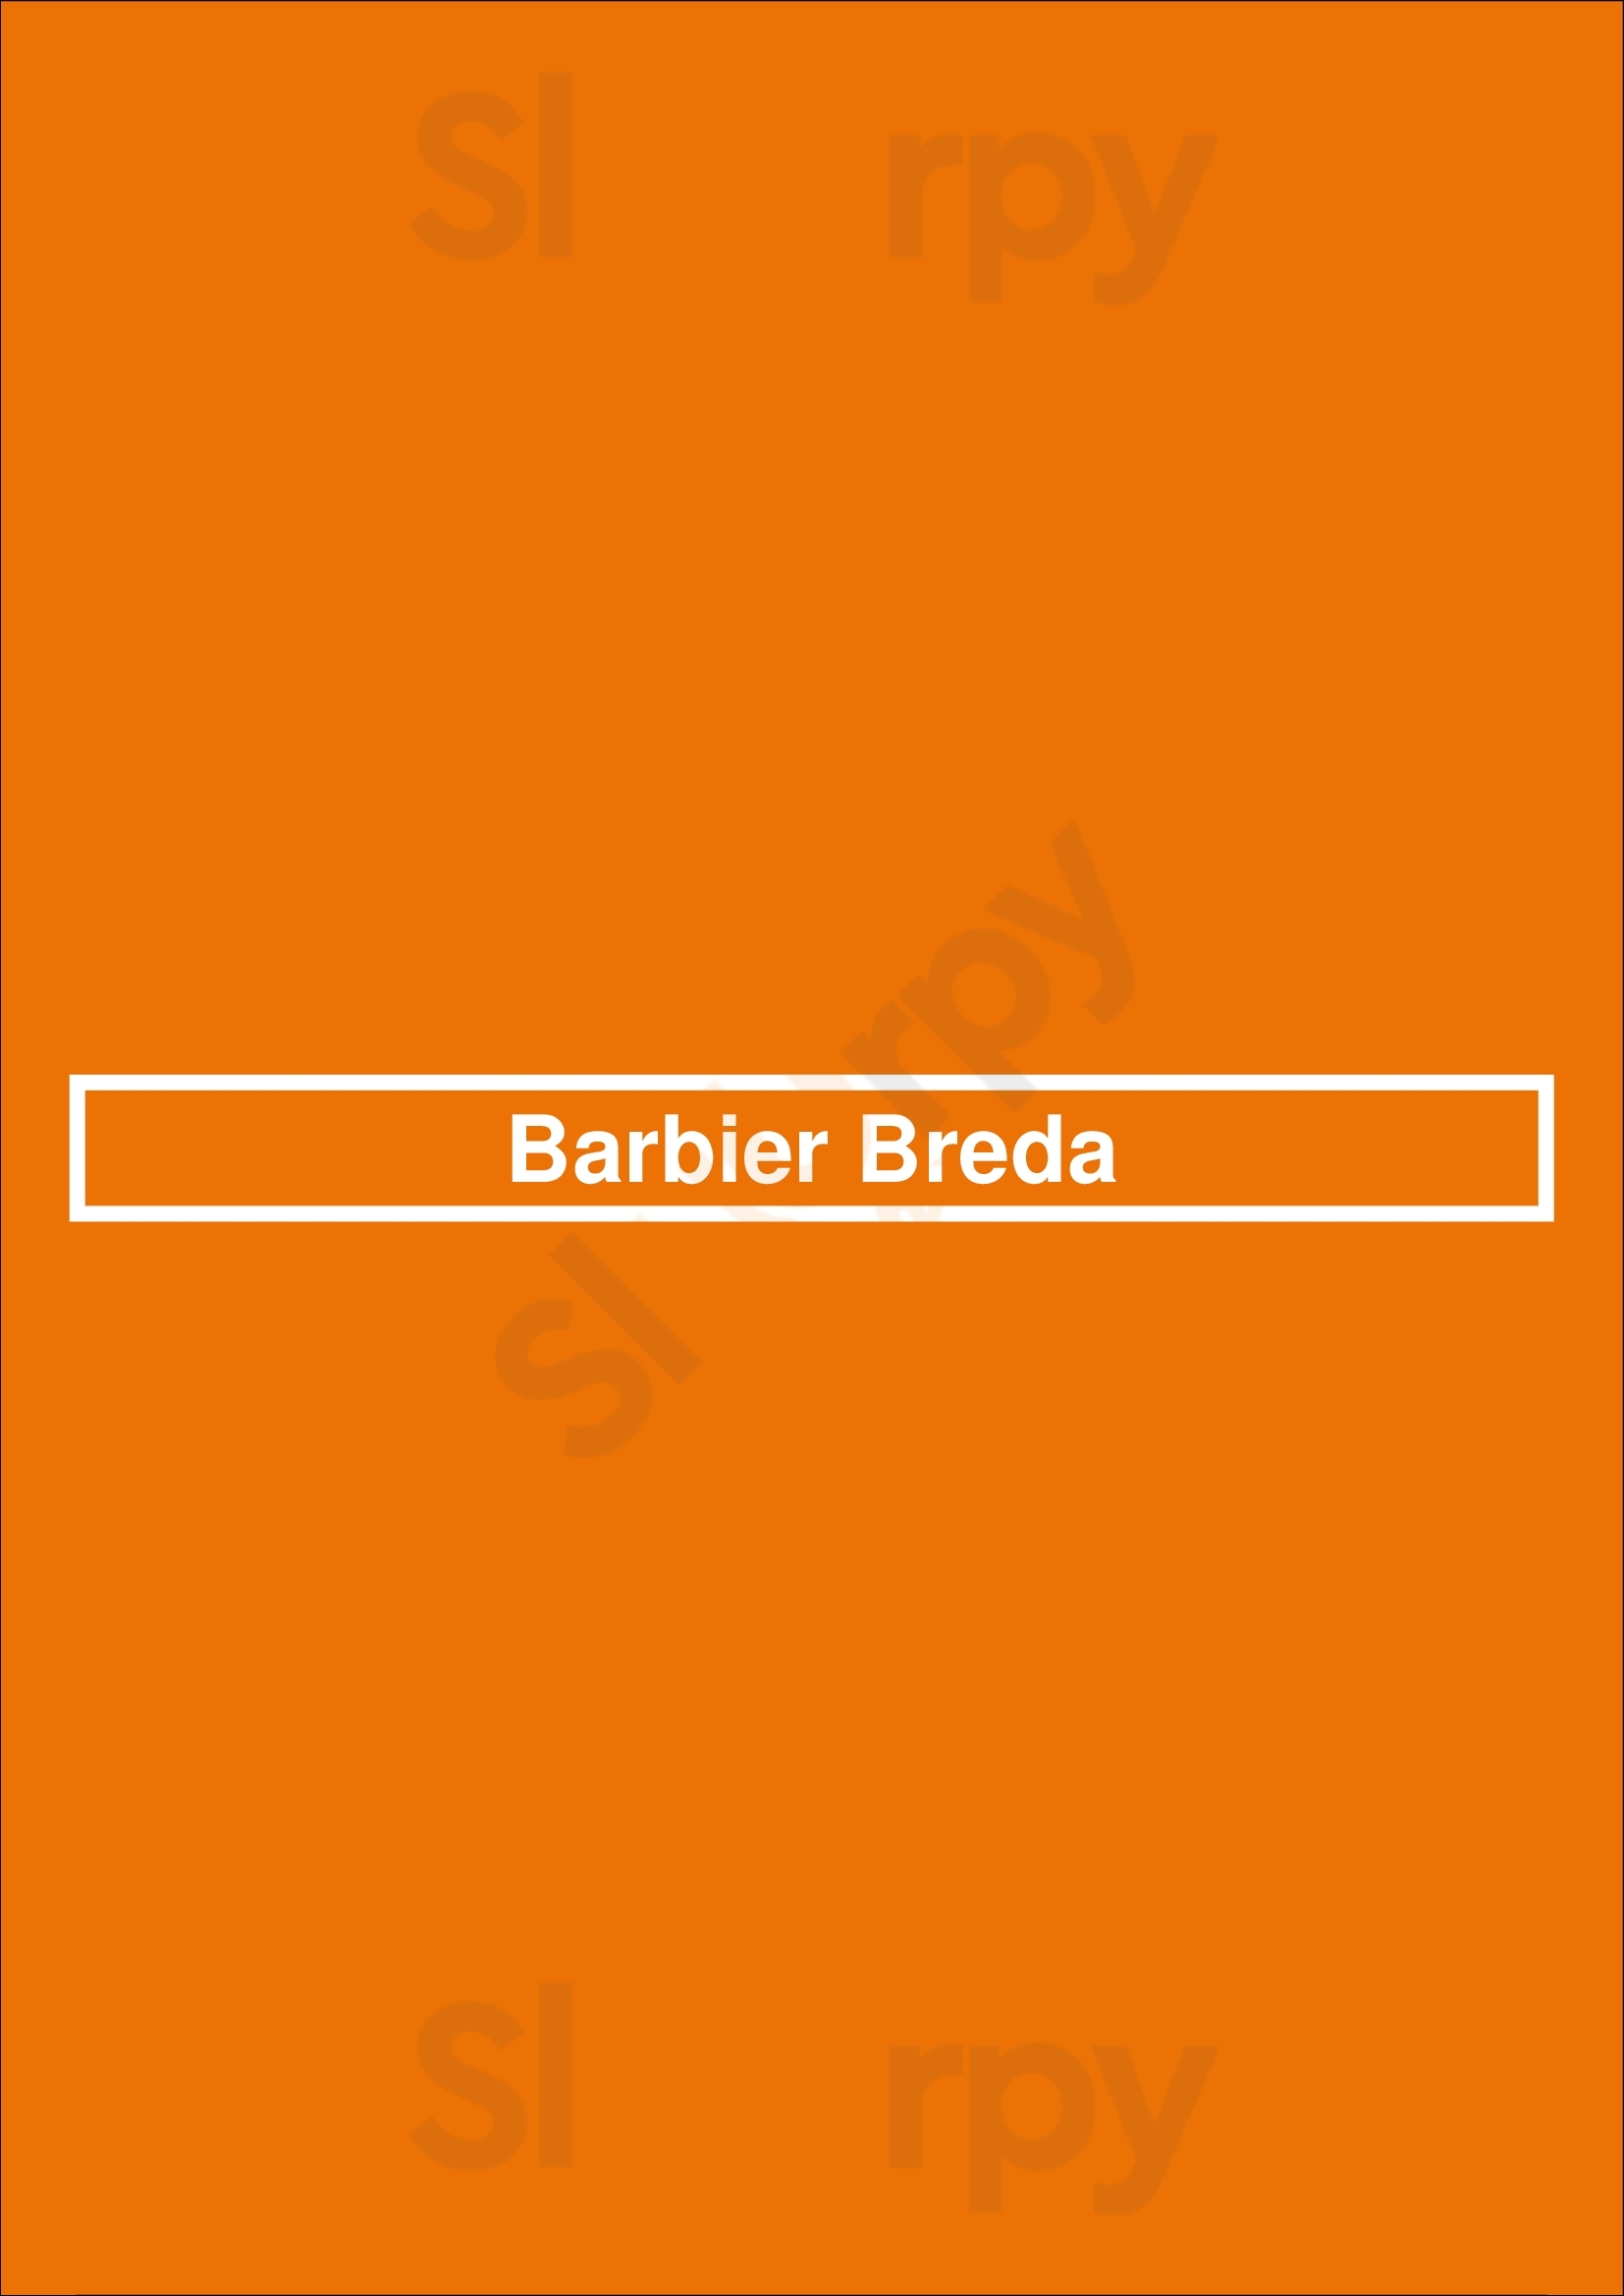 Barbier Breda Breda Menu - 1